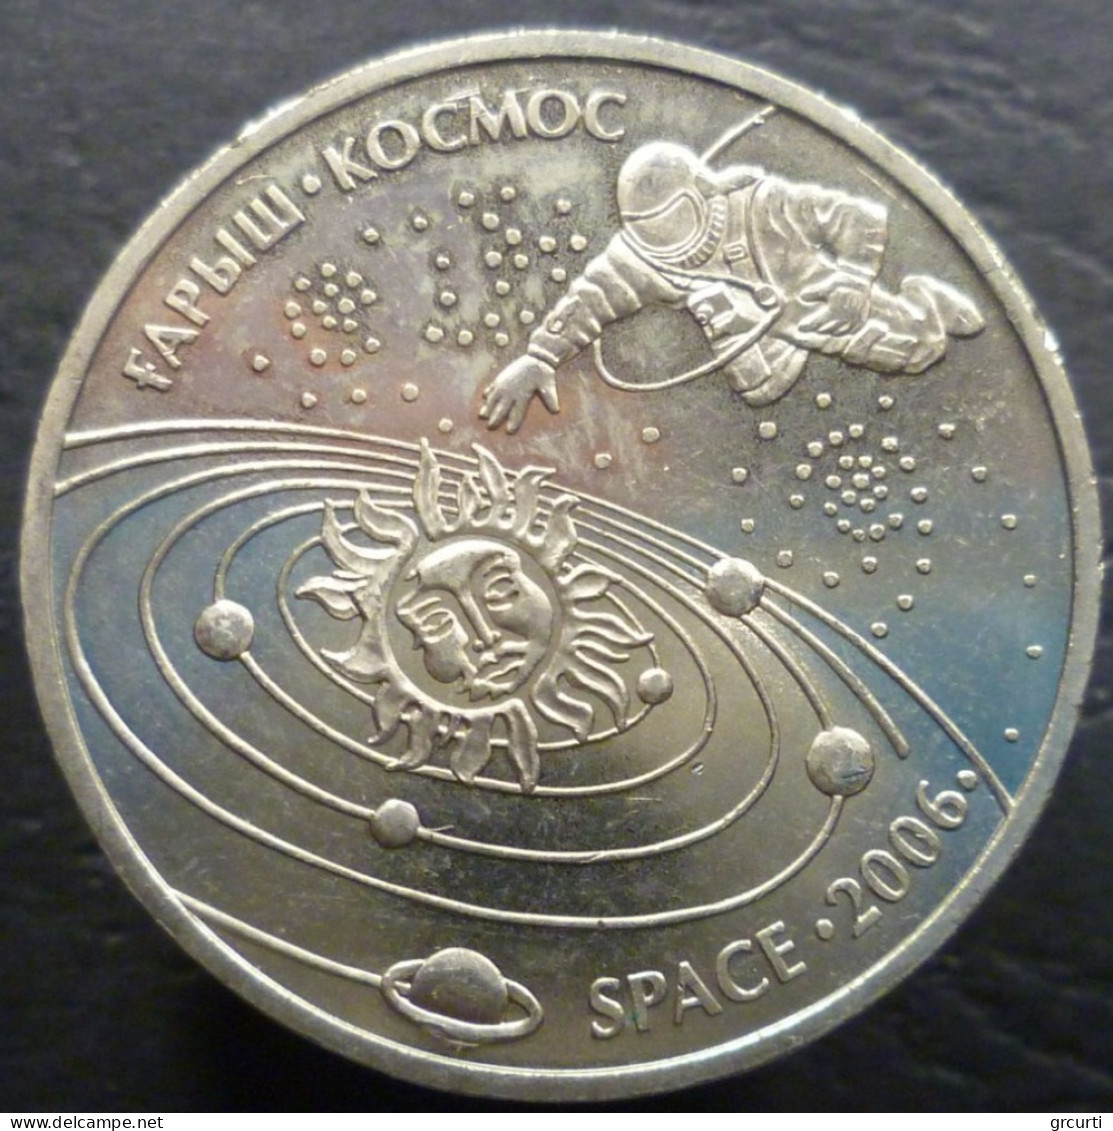 Kazakistan - 50 Tenge 2006 - Esplorazione Spaziale - KM# 73 - Kazajstán